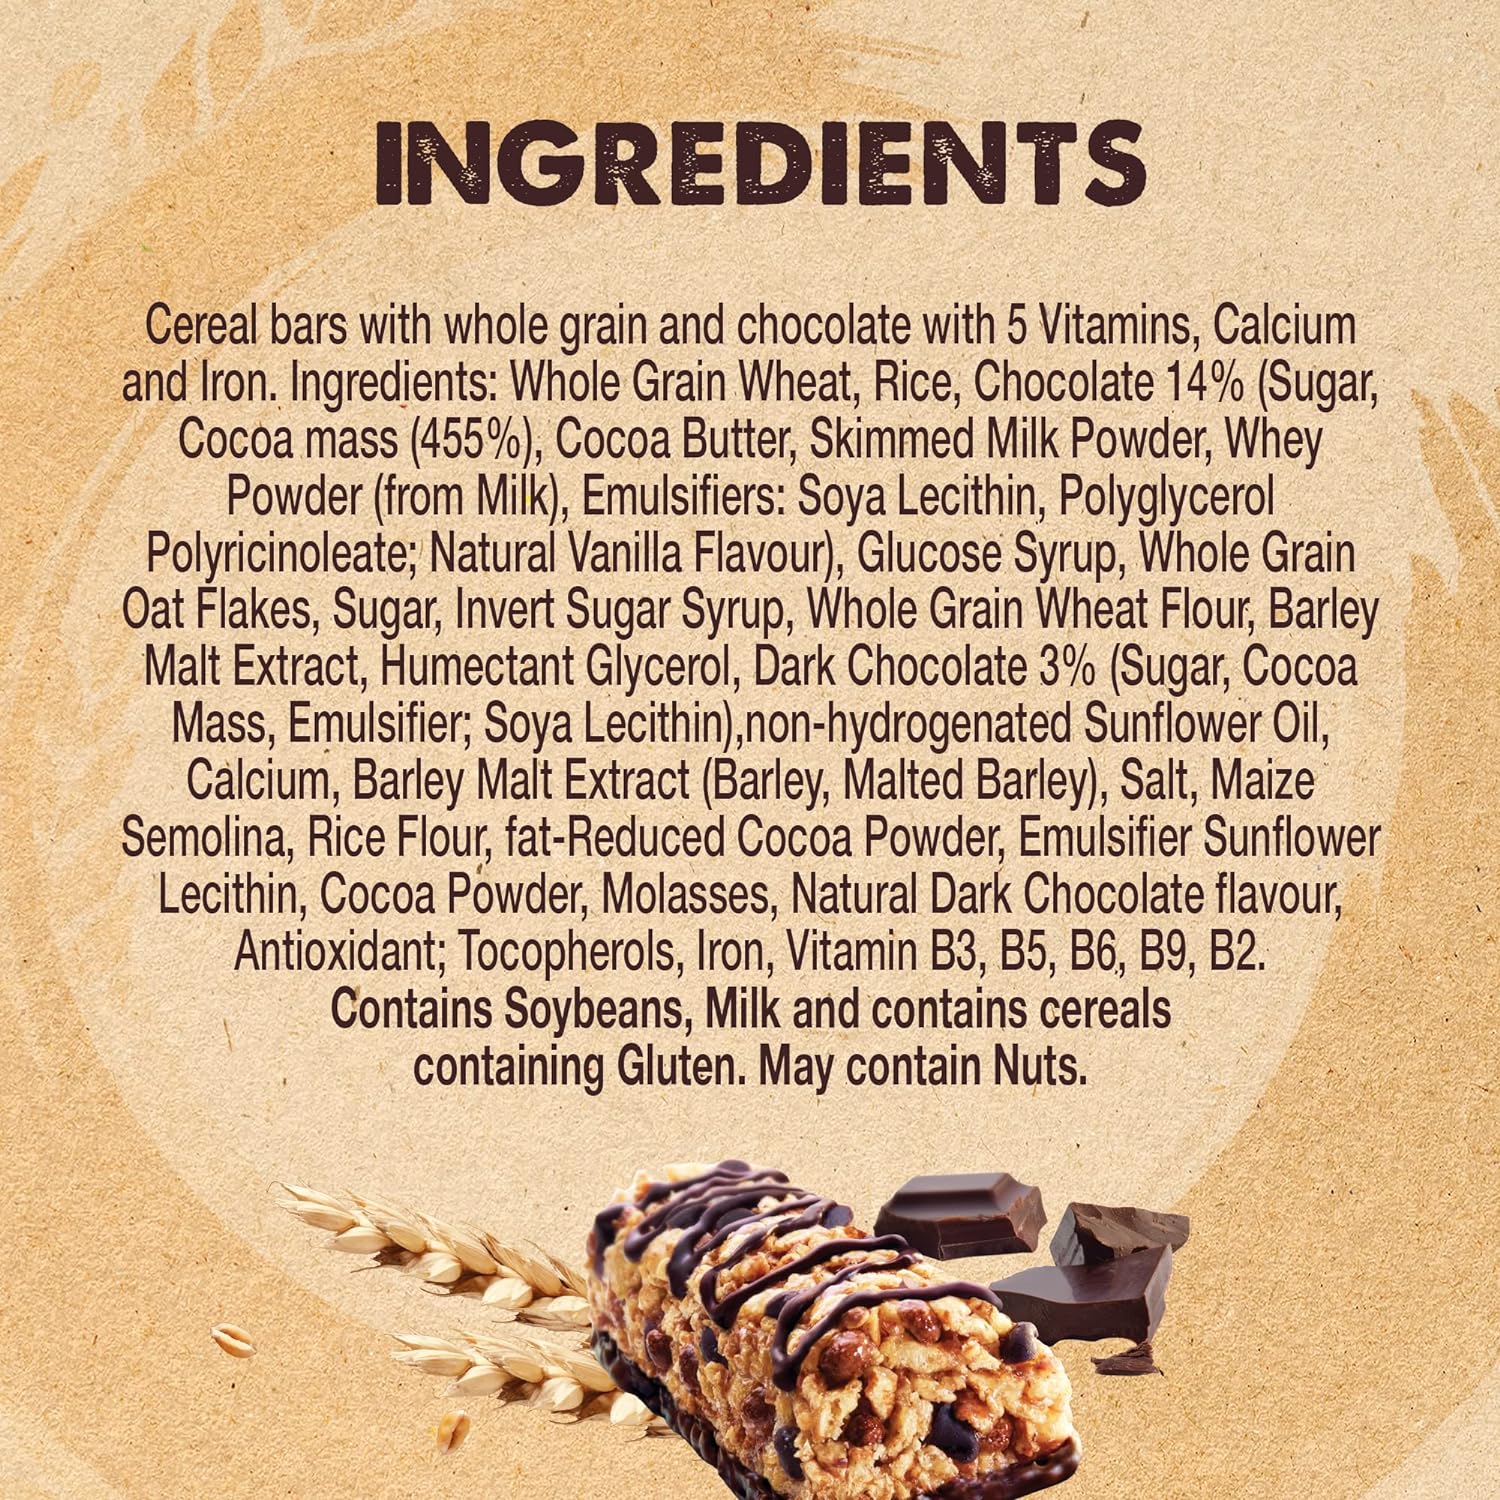 Nestle Fitness Chocolate Breakfast Cereal Bar 23.5g (6 Bars)